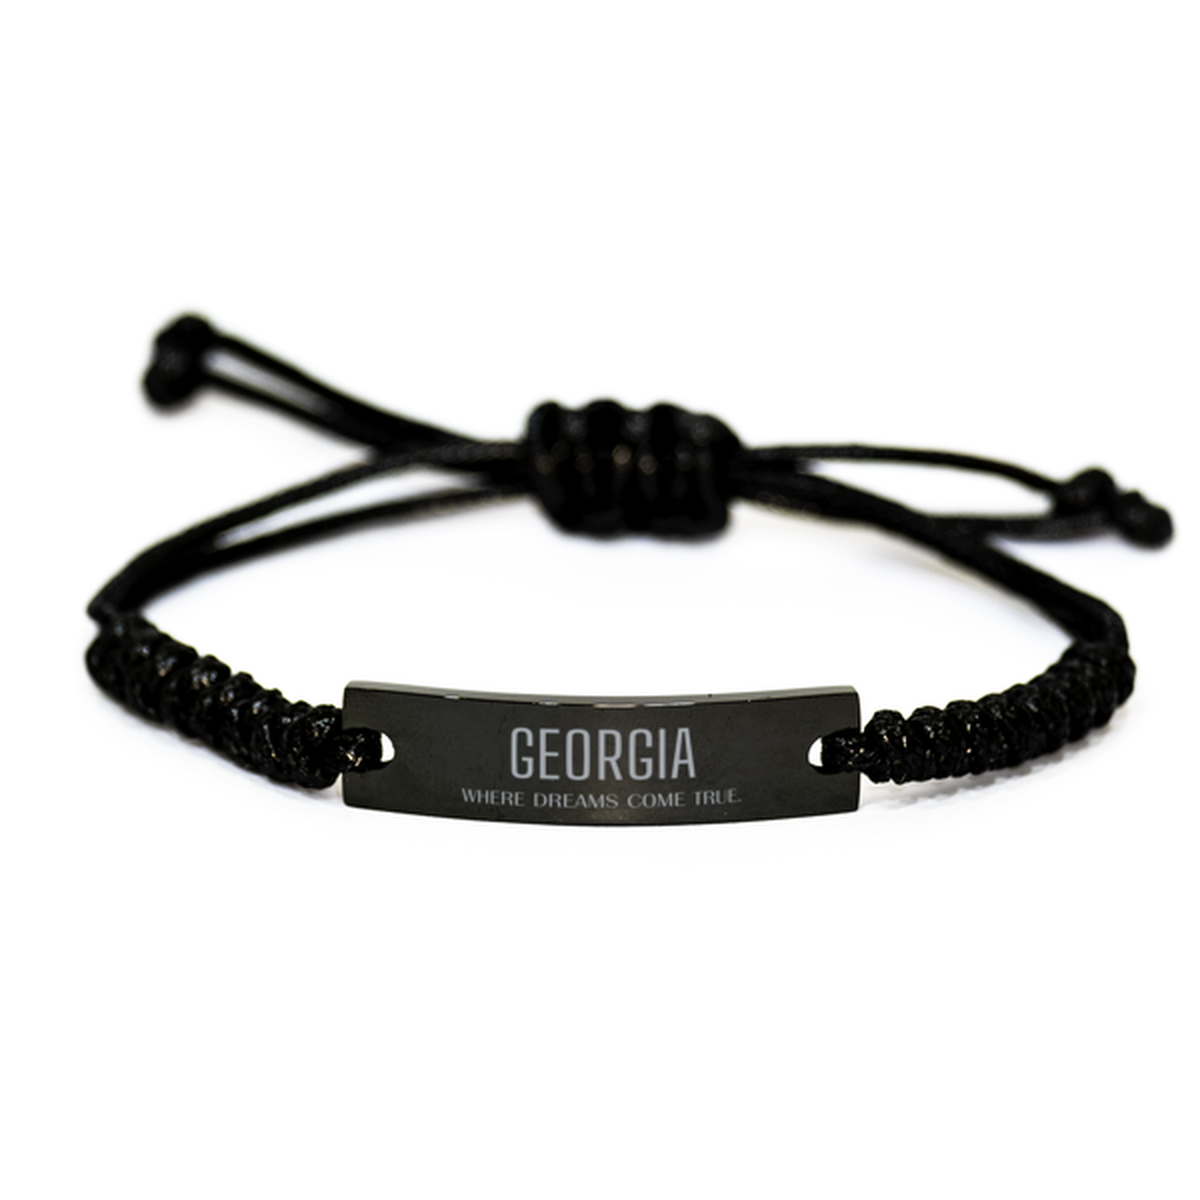 Love Georgia State Black Rope Bracelet, Georgia Where dreams come true, Birthday Inspirational Gifts For Georgia Men, Women, Friends